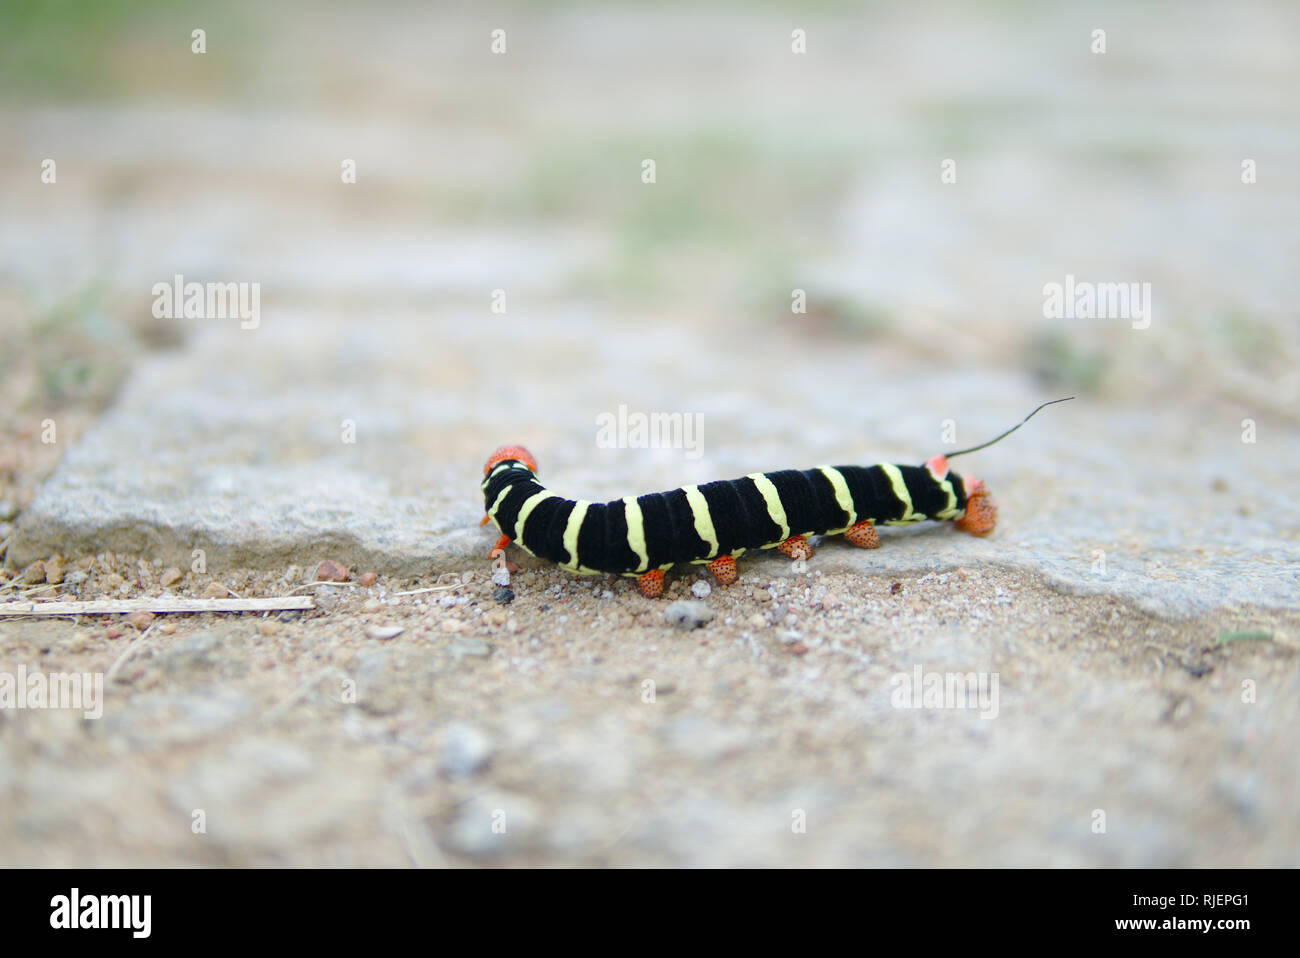 A colorful caterpillar. Stock Photo